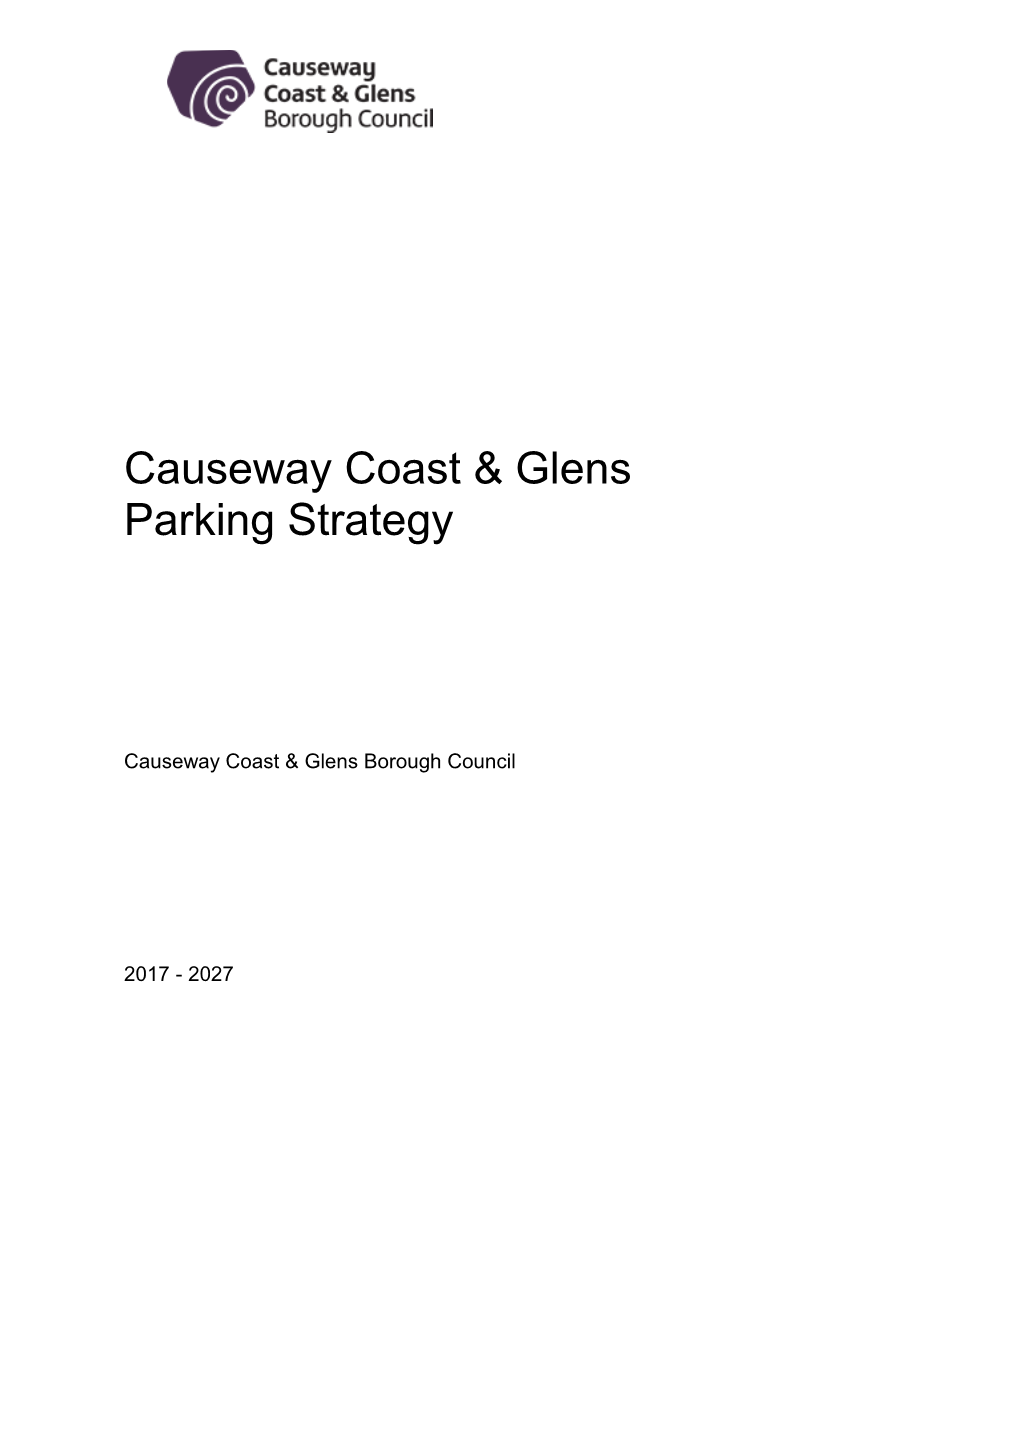 Causeway Coasts & Glens Parking Strategy